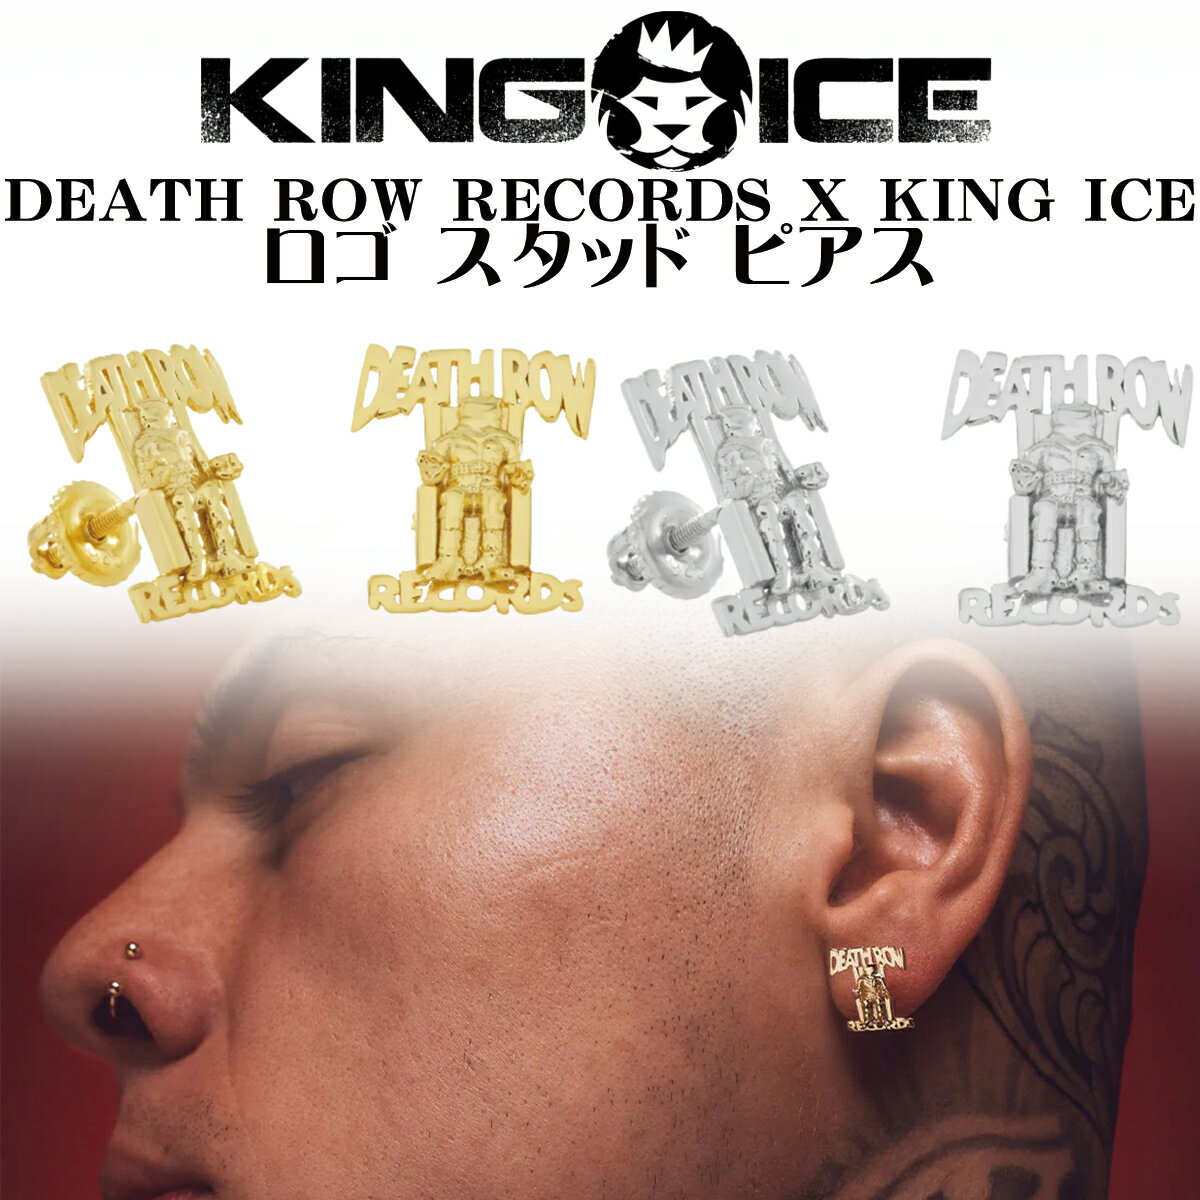 KING ICE LOACX sAX  DEATH ROW RECORDS X KING ICE S X^bh sAX X^COVo[ 14kS[h  Vo[ 2Zbg Y uh lC[ANZT[]